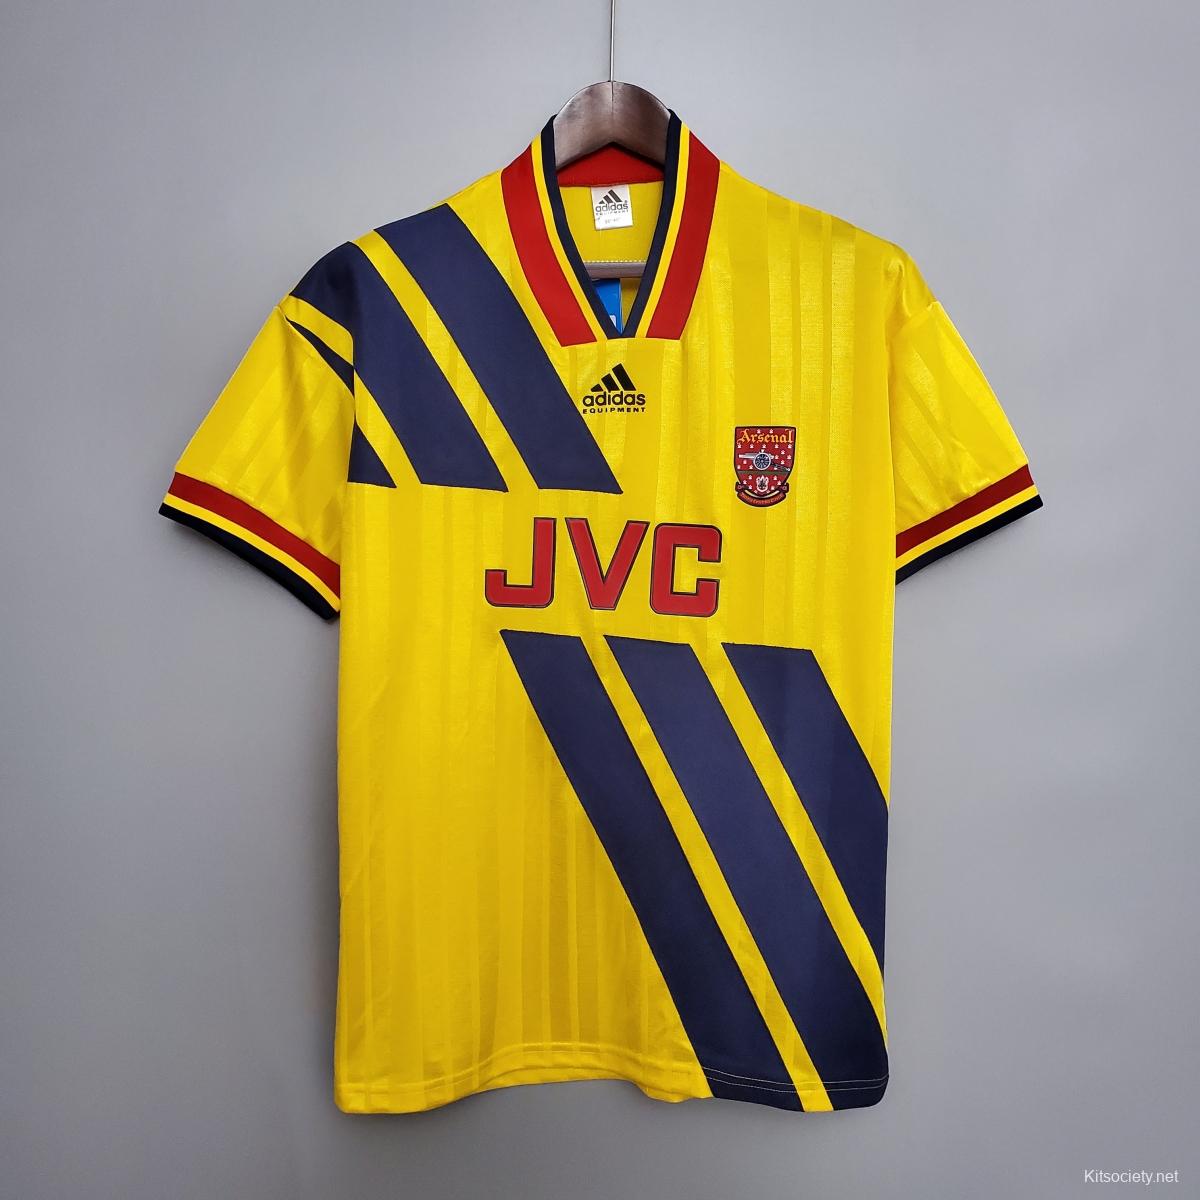 Arsenal Retro 92-94 Home Shirt  Retro shirts, Adulting shirts